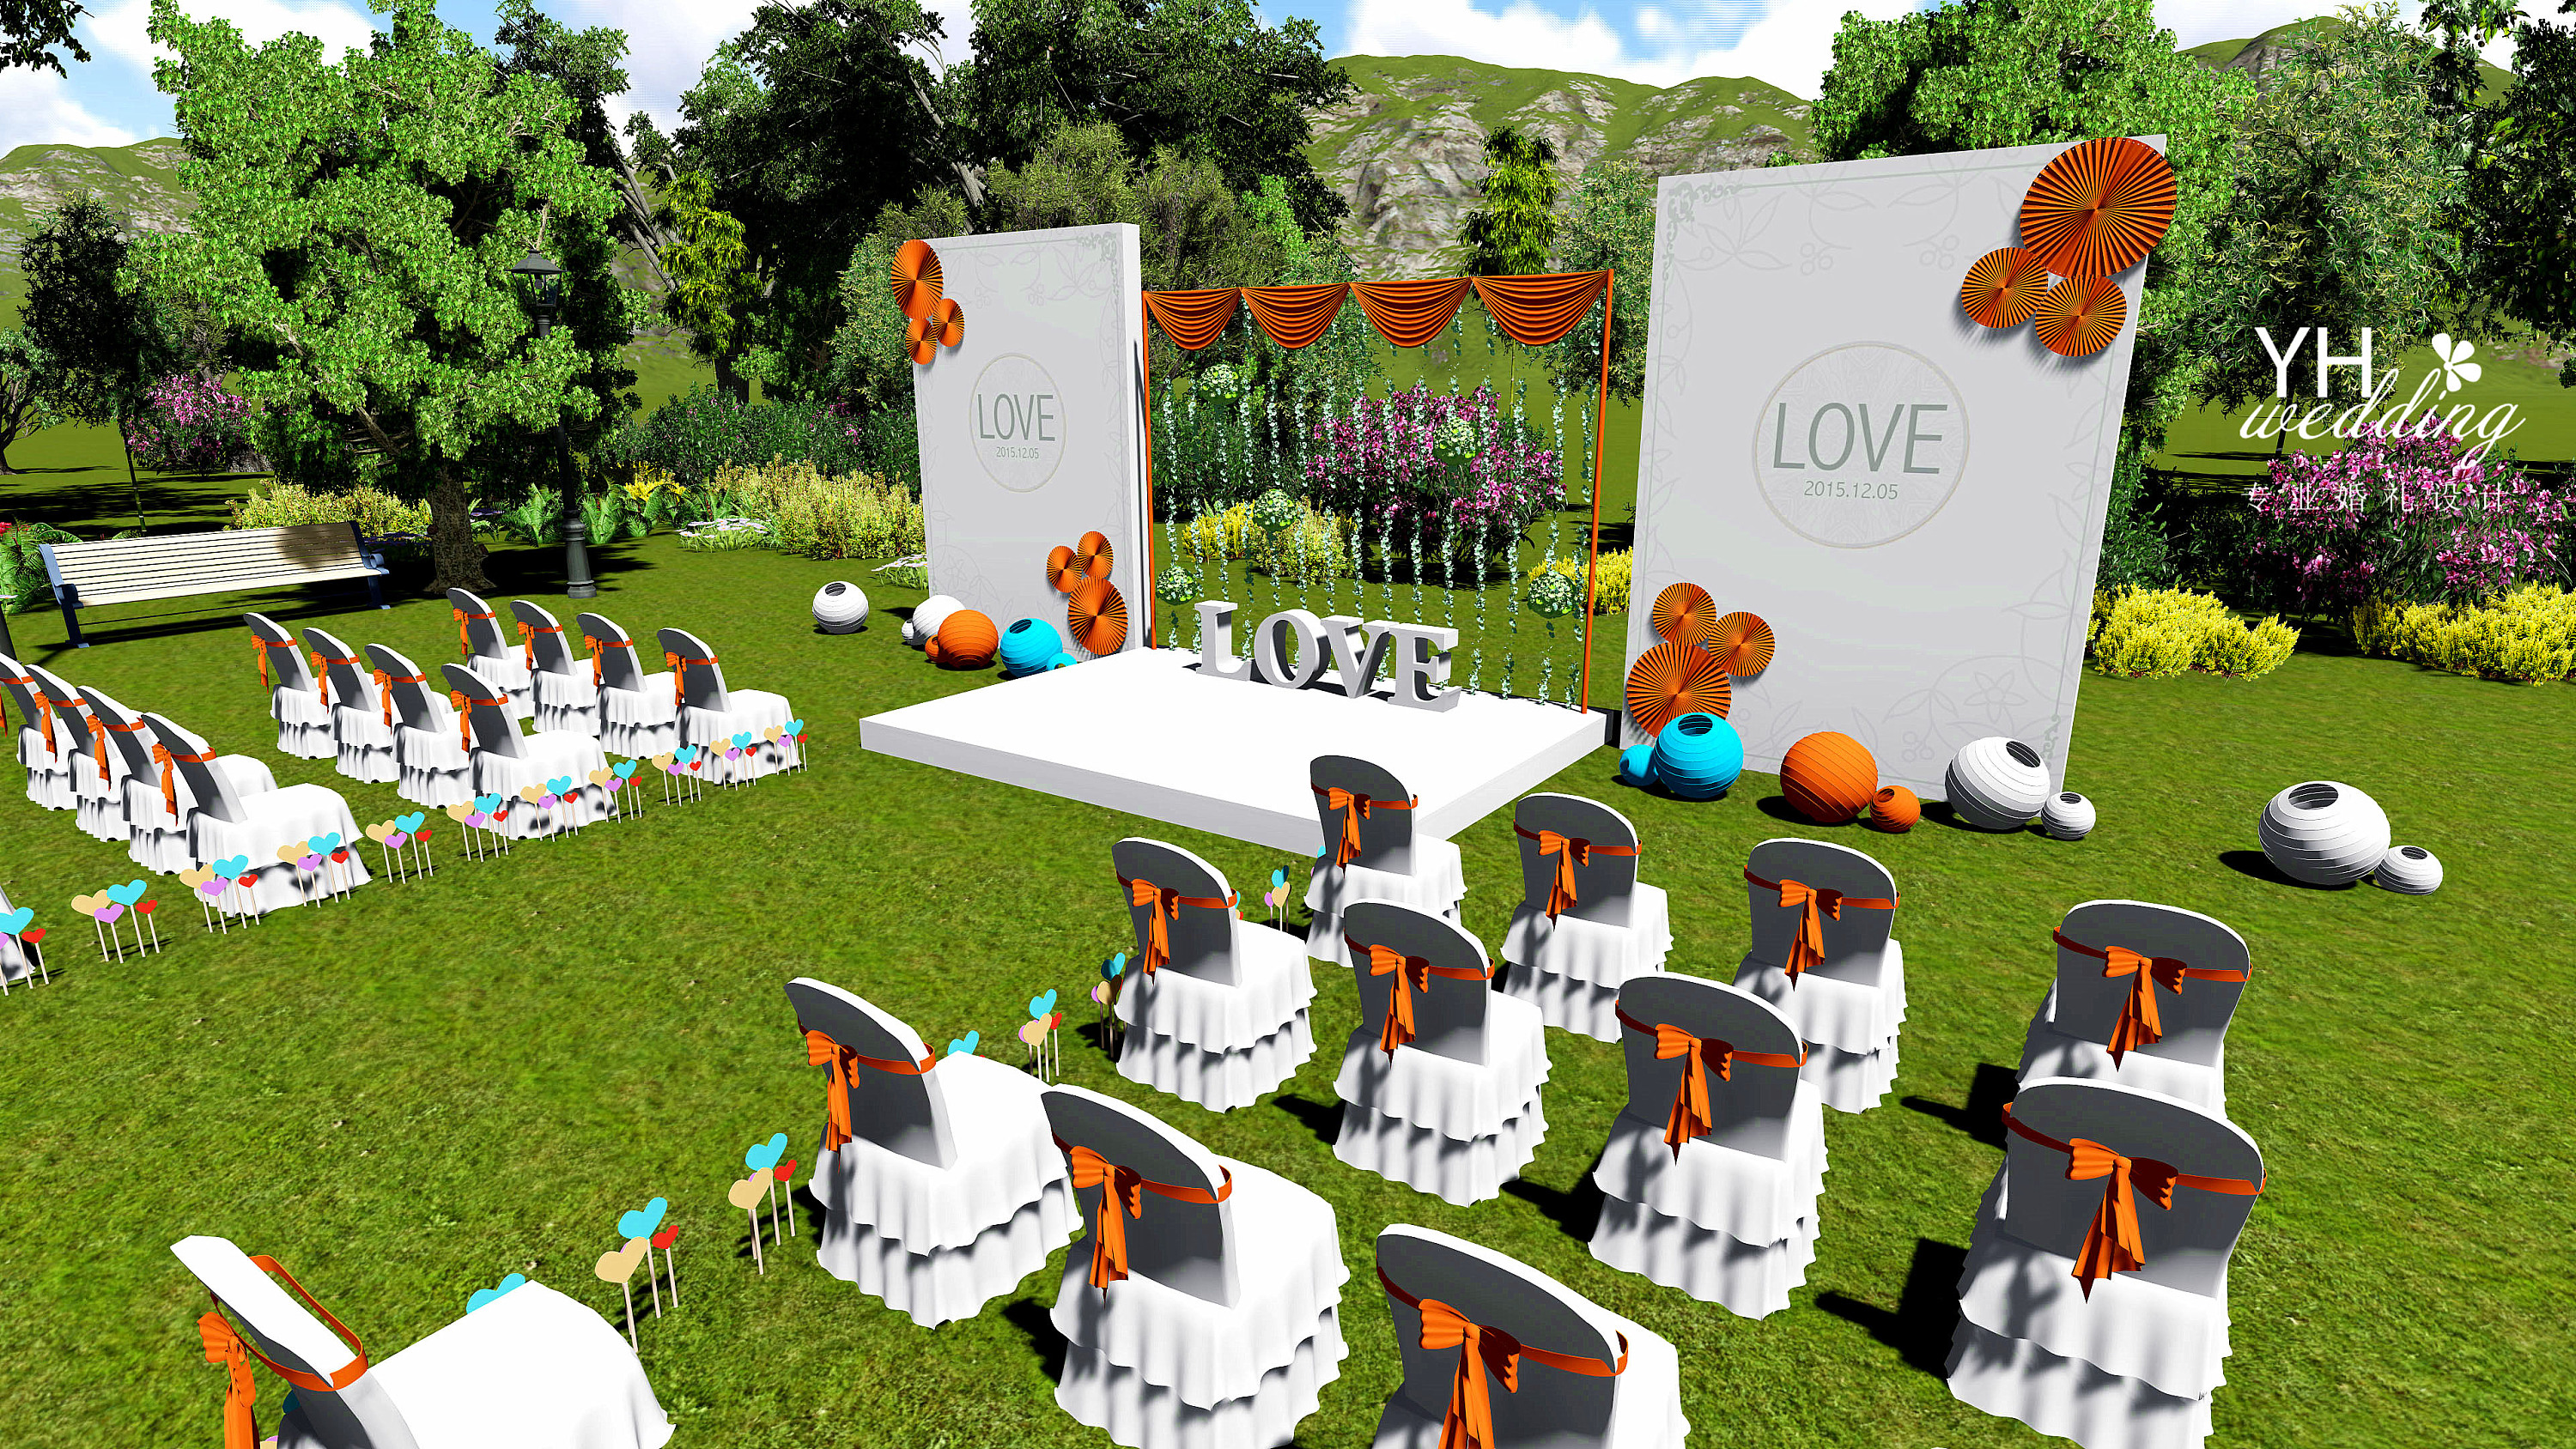 yhwedding婚礼设计:用lumion表现户外婚礼舞台 3d效果